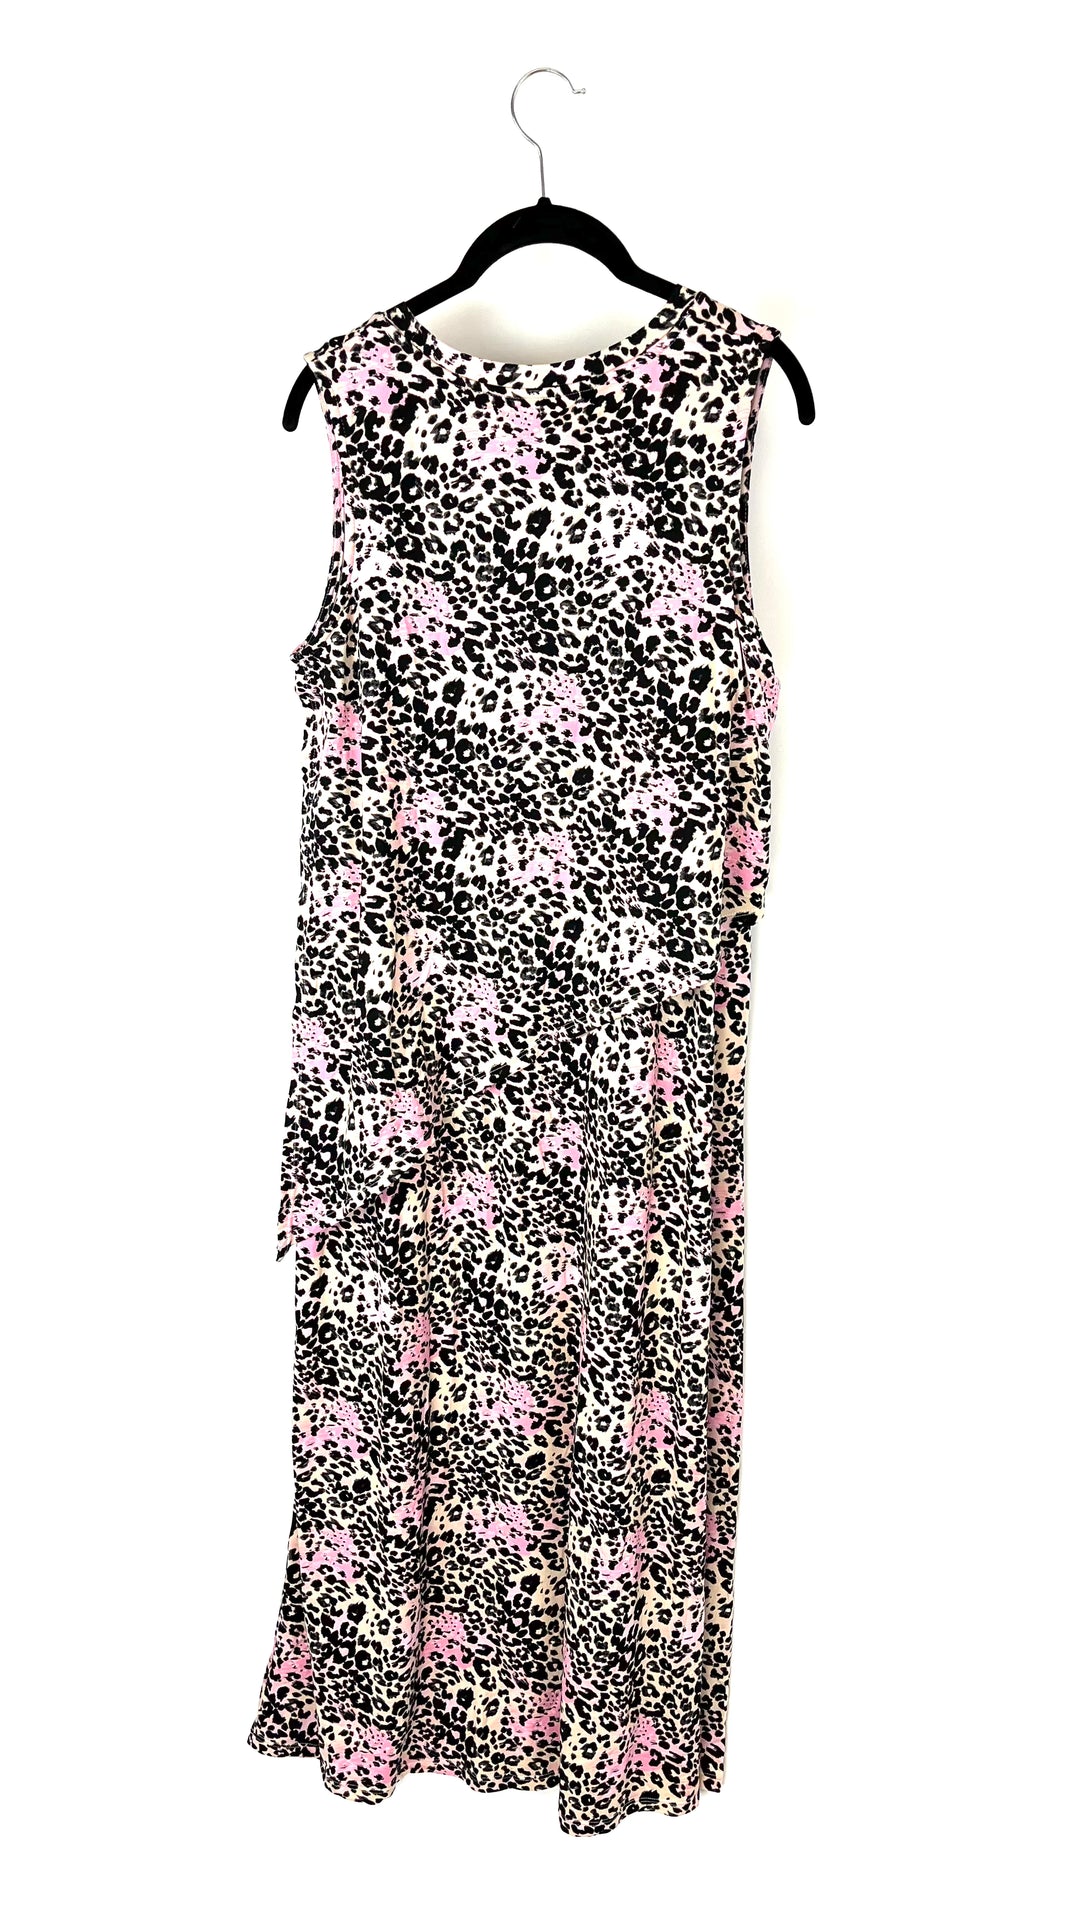 Cheetah Print Maxi Dress - Size 10/12